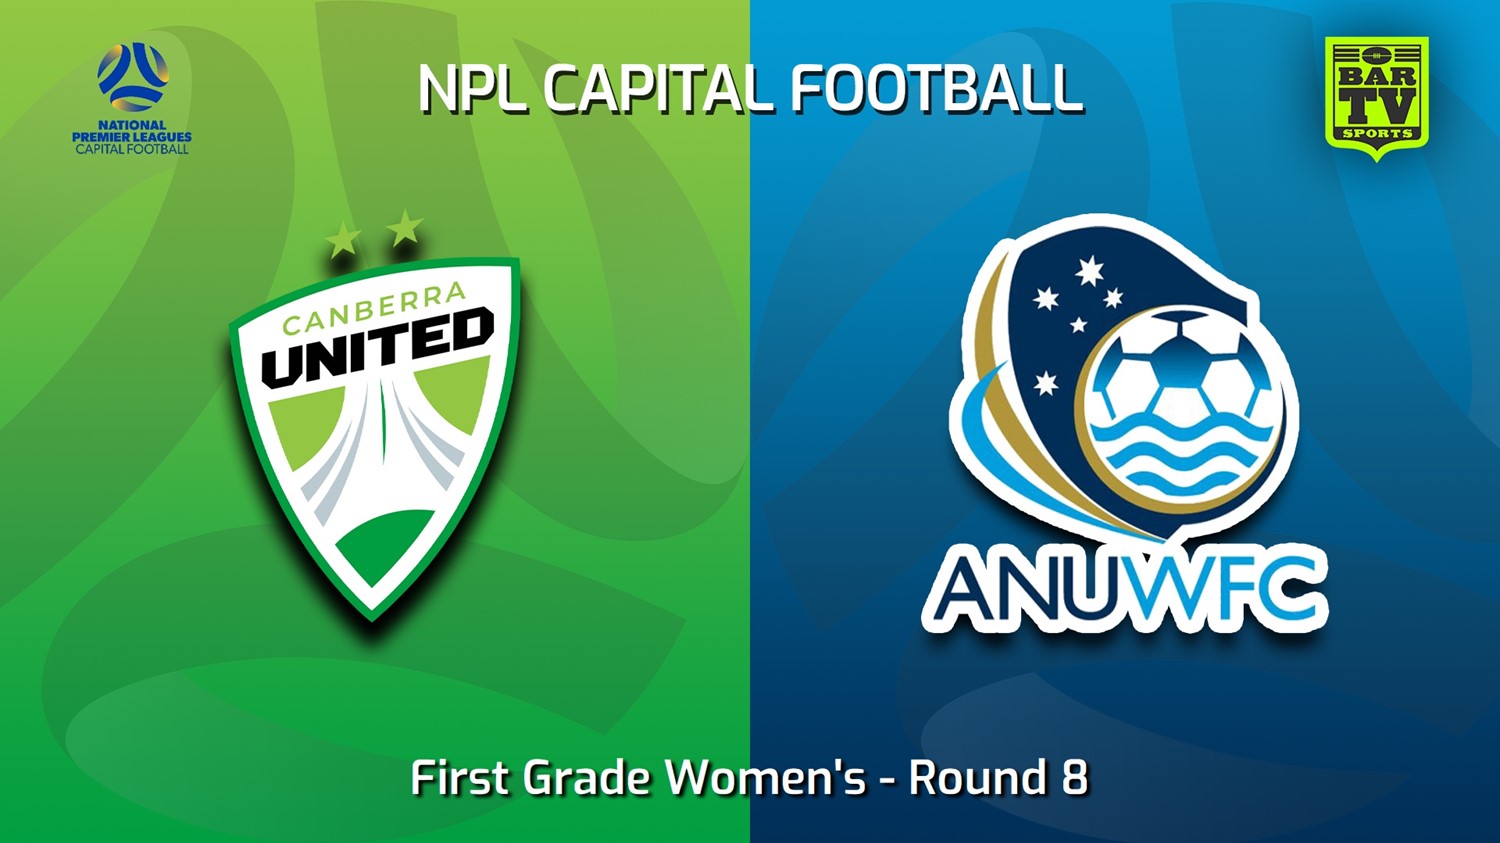 230528-Capital Womens Round 8 - Canberra United Academy v ANU WFC (women) Minigame Slate Image